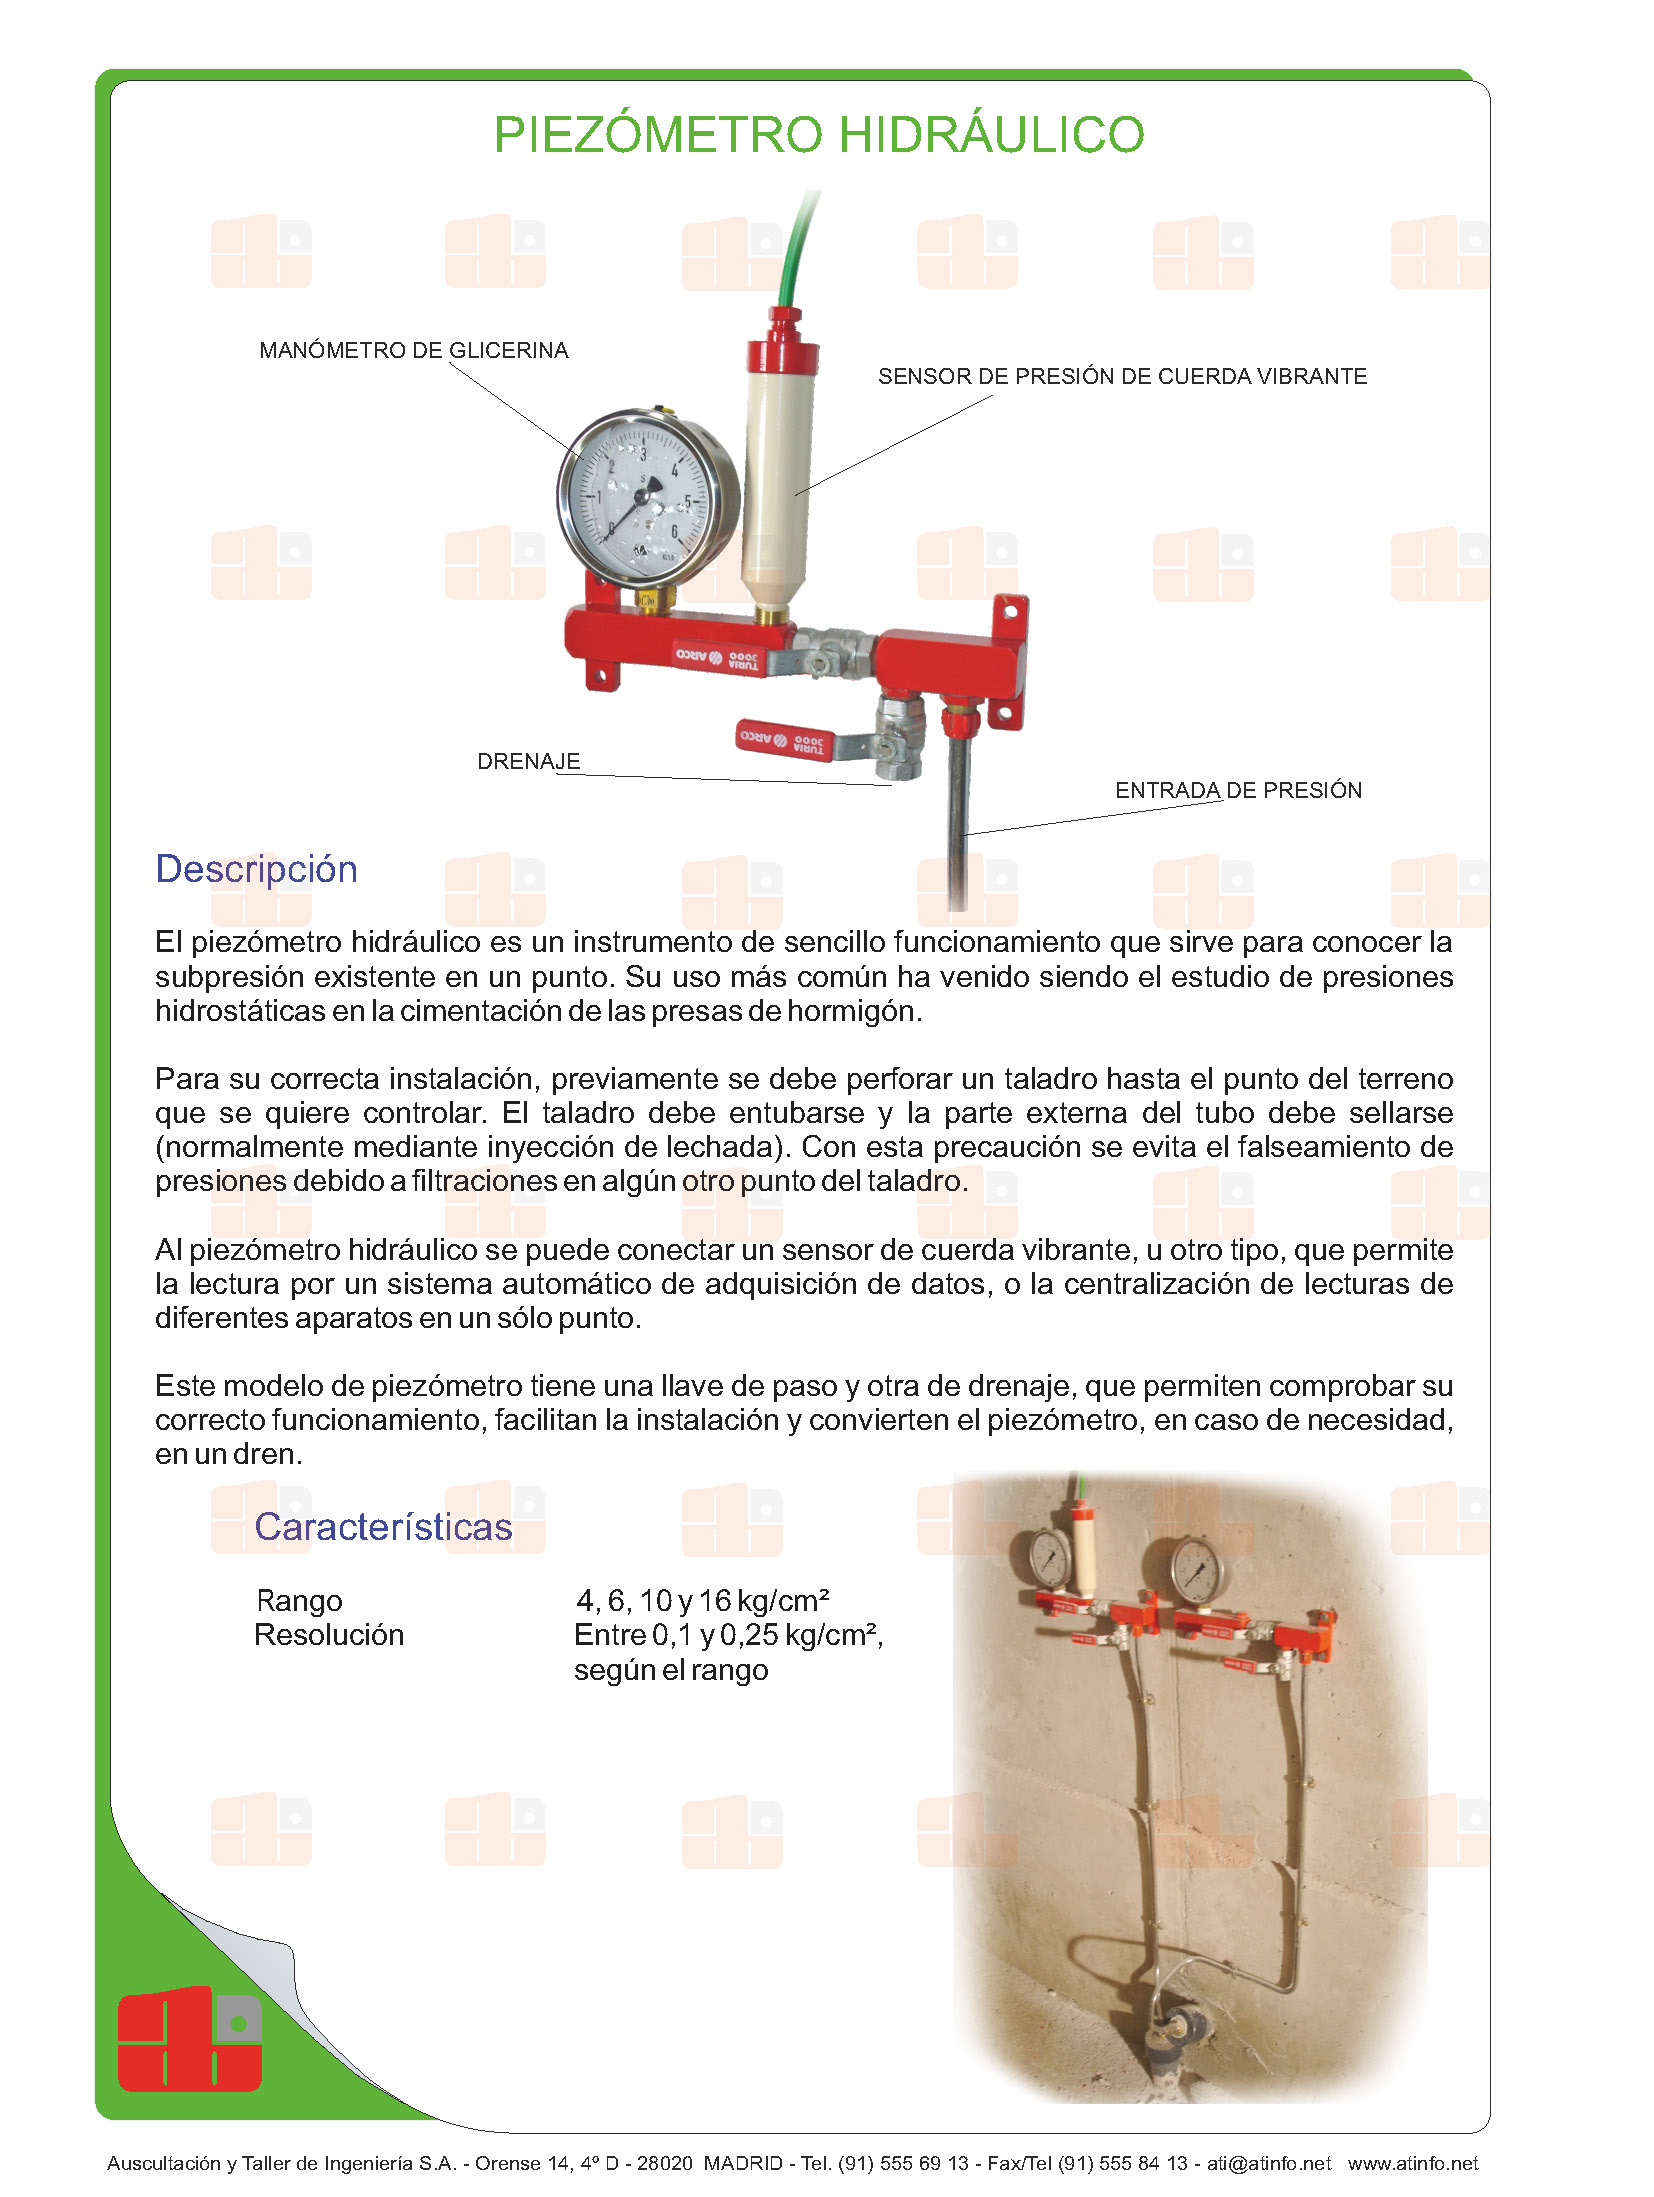 auscultacion-ingenieria-atinfo-piezometro-hidraulico